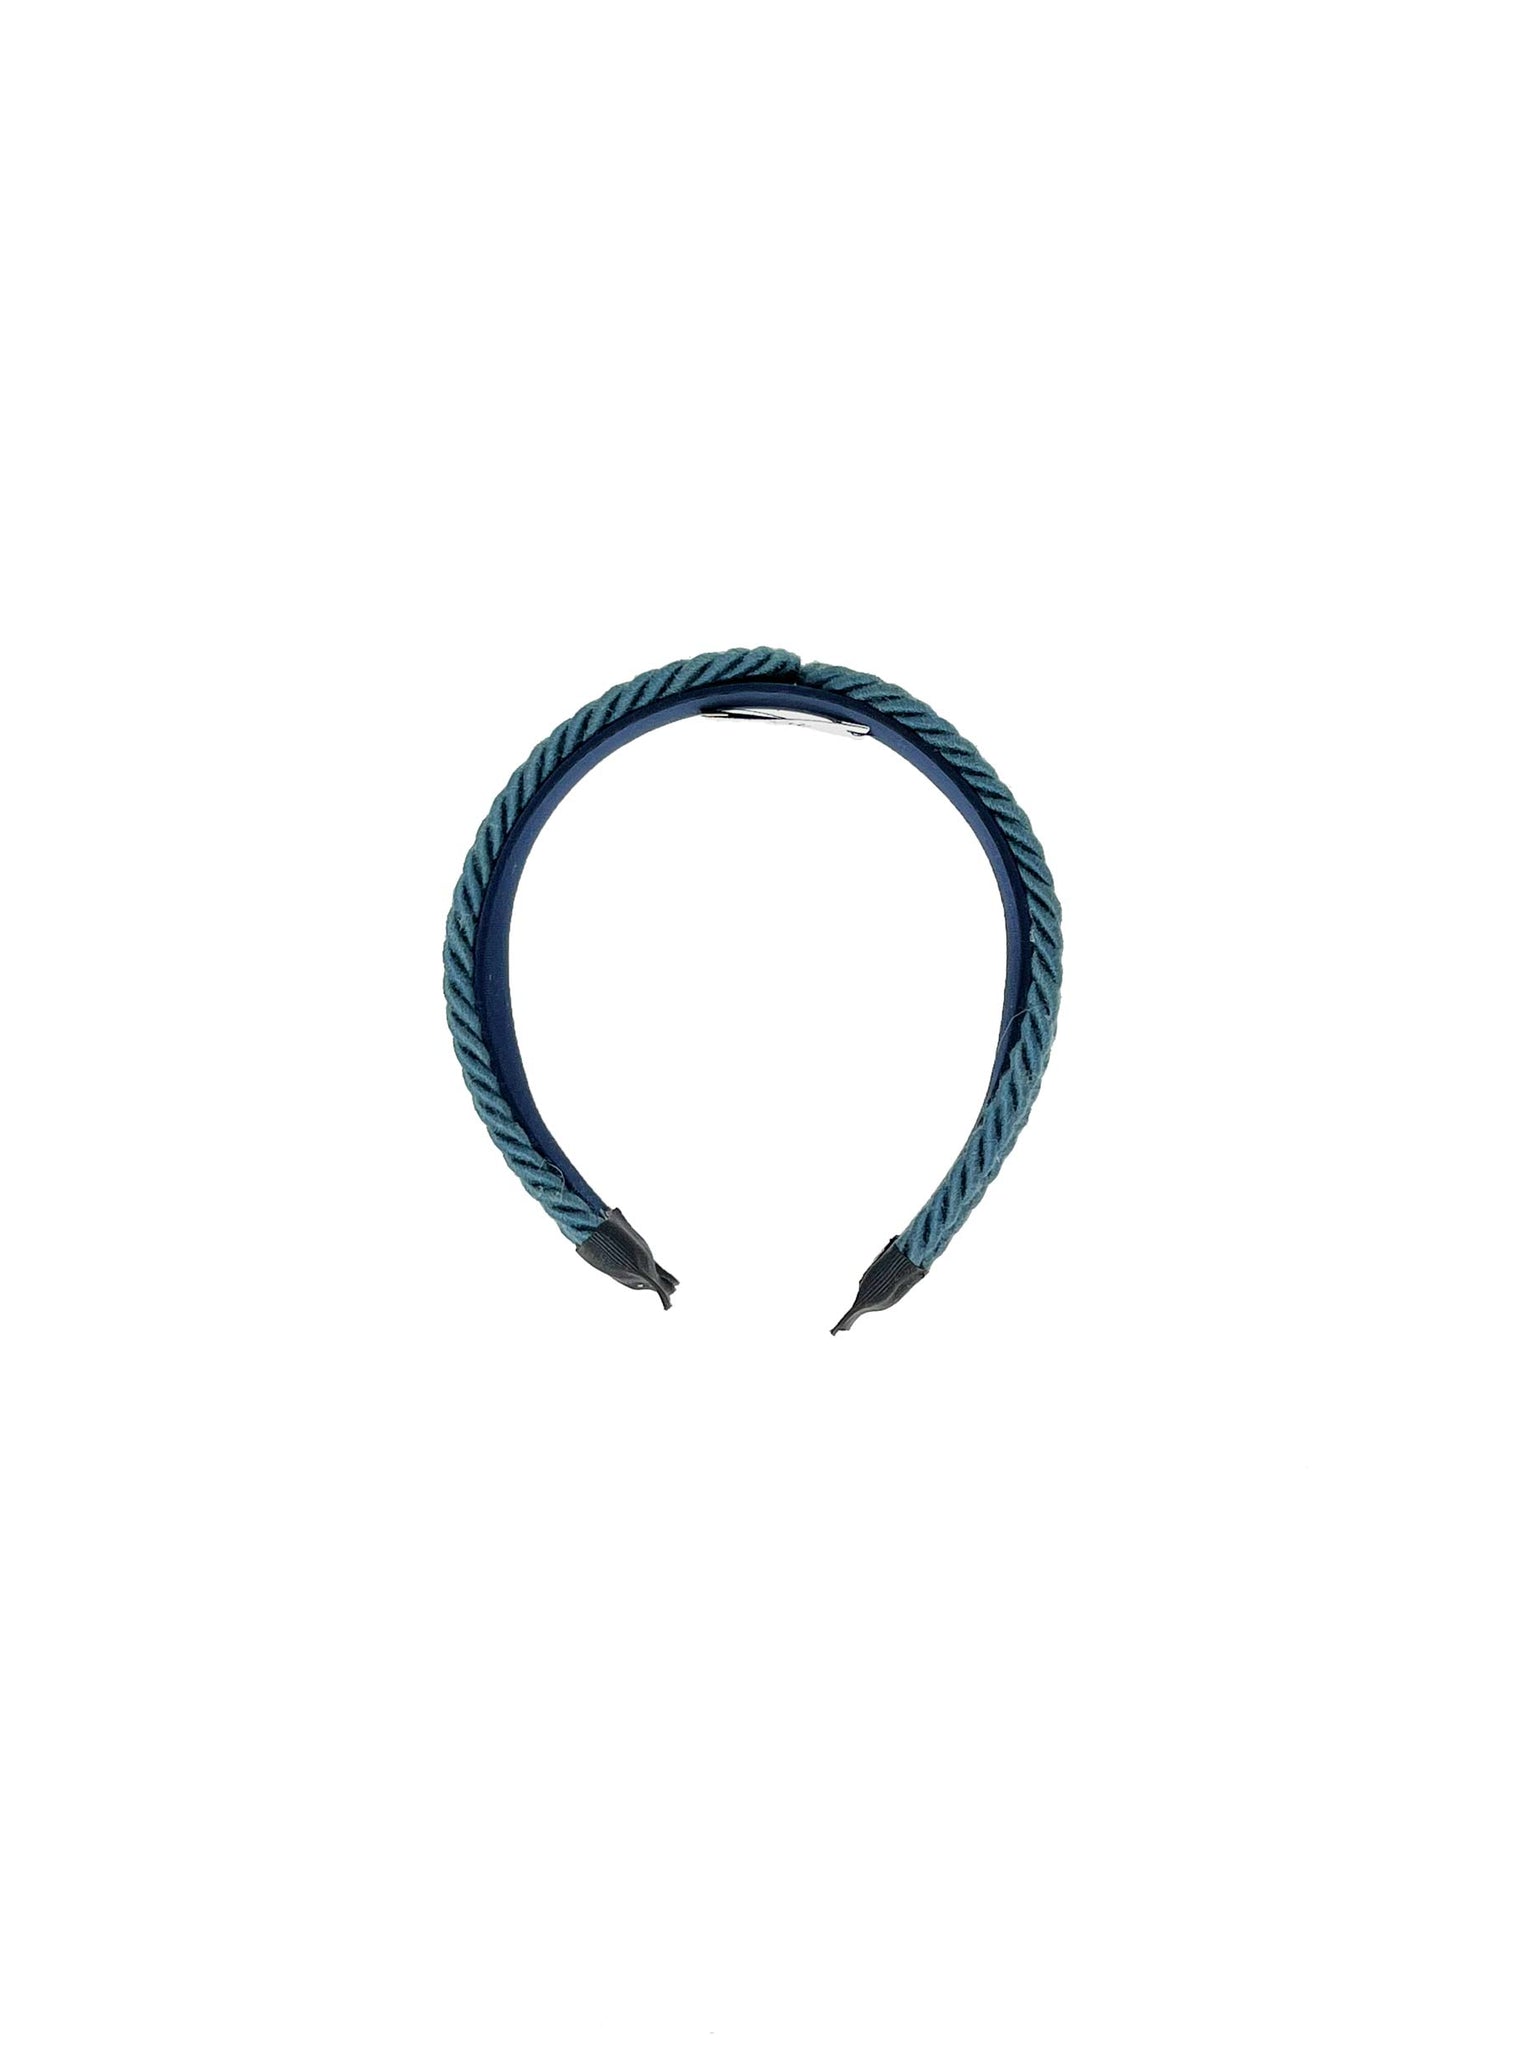 Headband with double avion blue cord